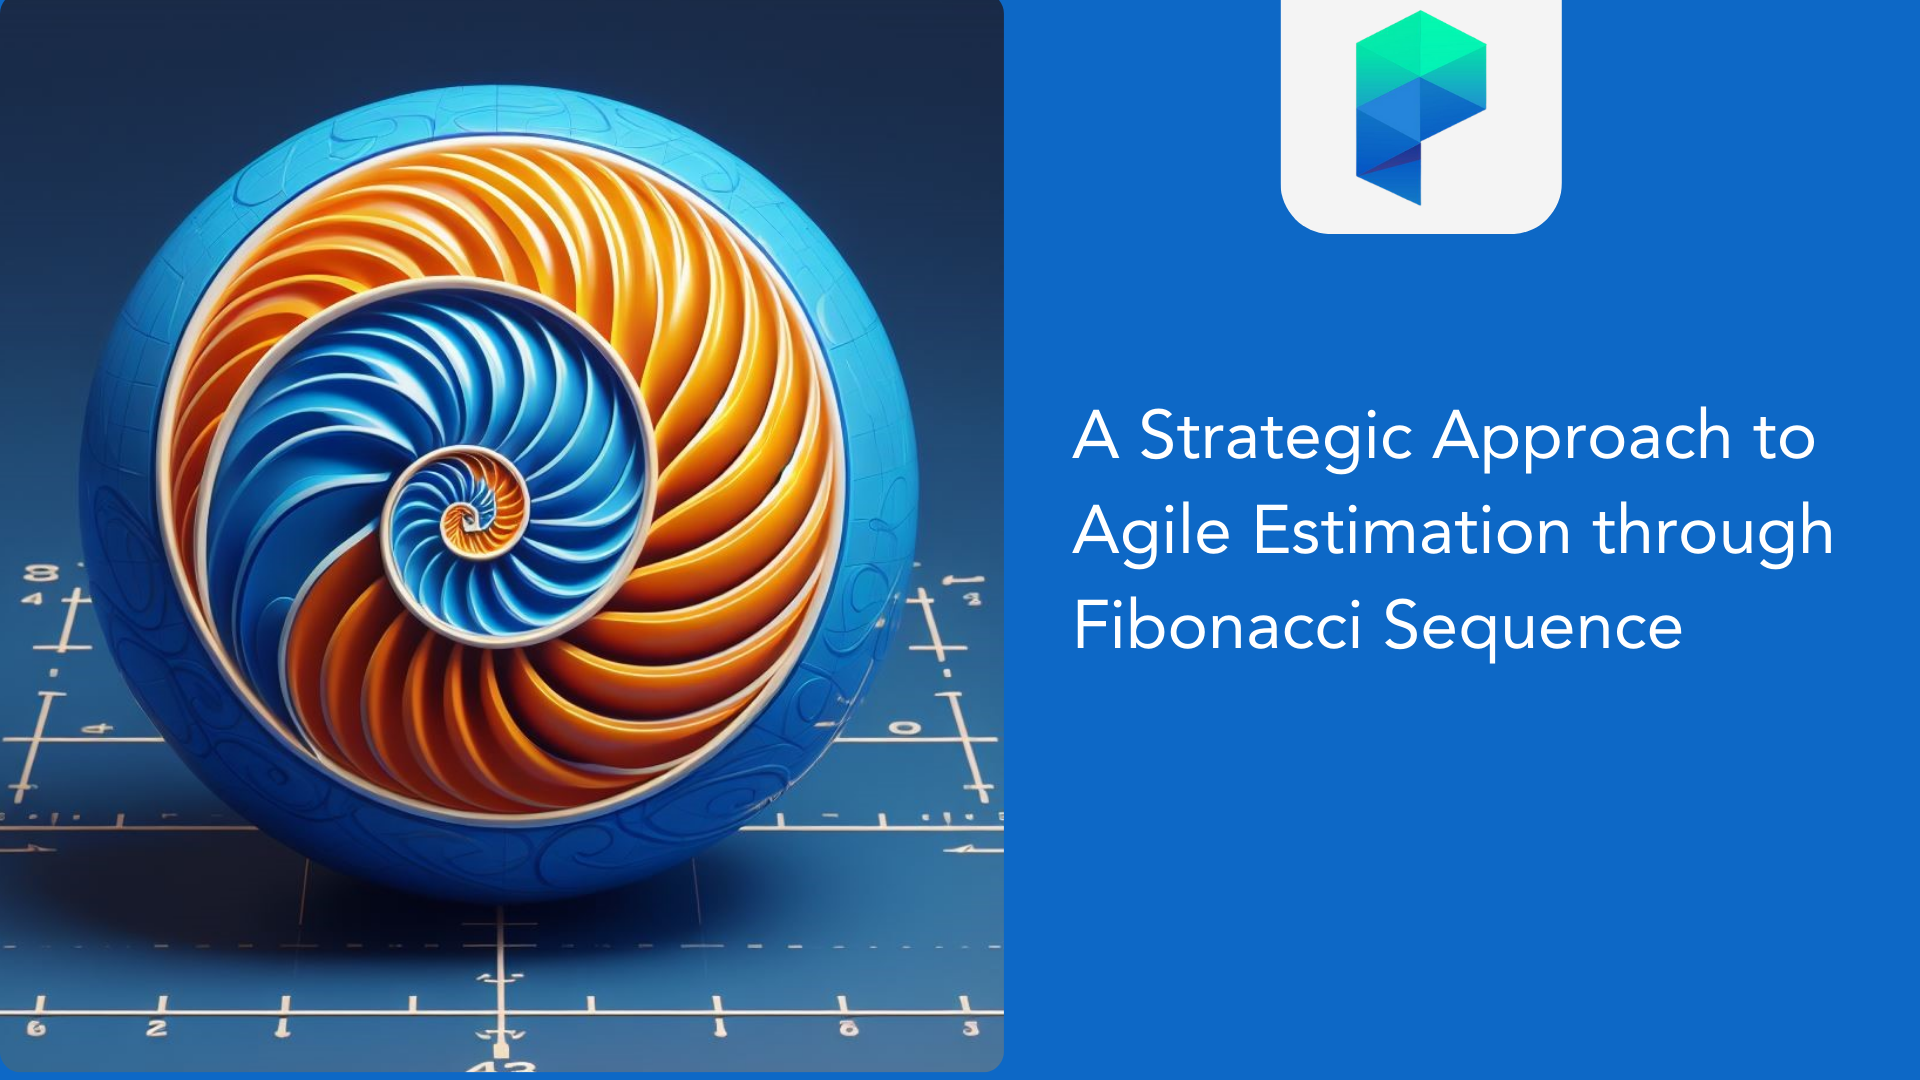 A Strategic Approach to Agile Estimation through the Fibonacci Sequence